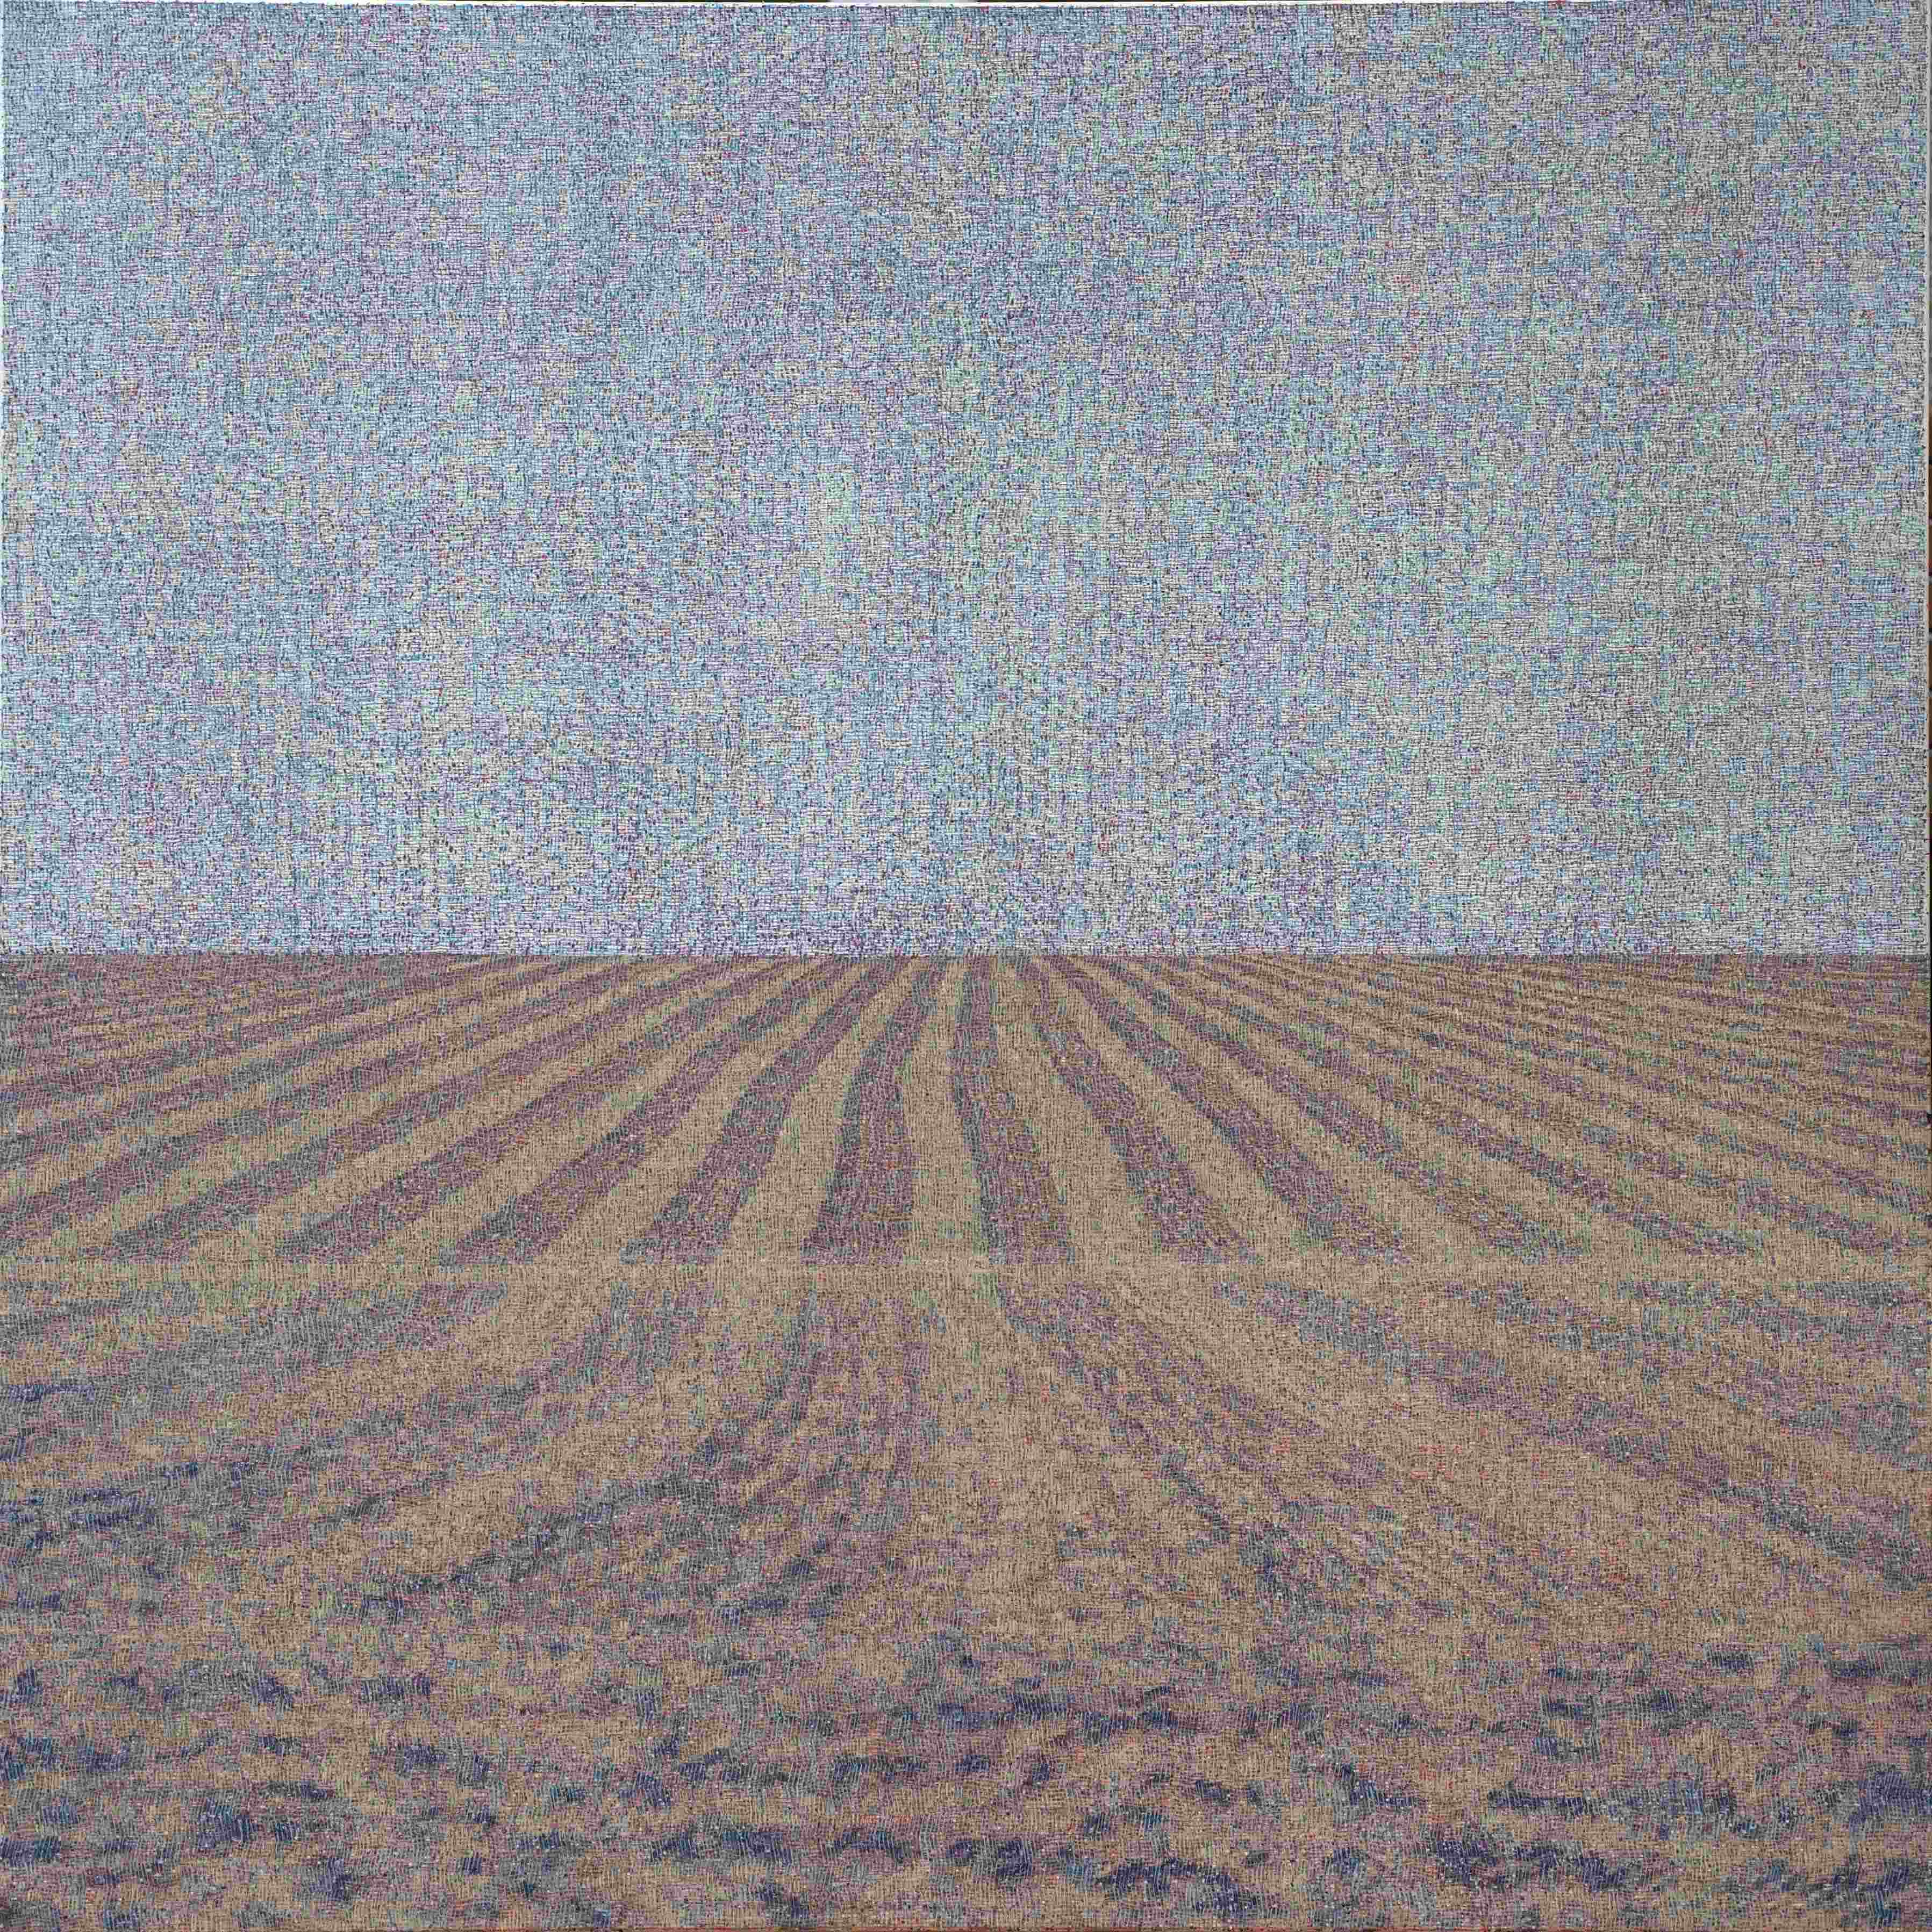 light-fields-vii-oil-on-canvas-130x130cm-2021.jpeg